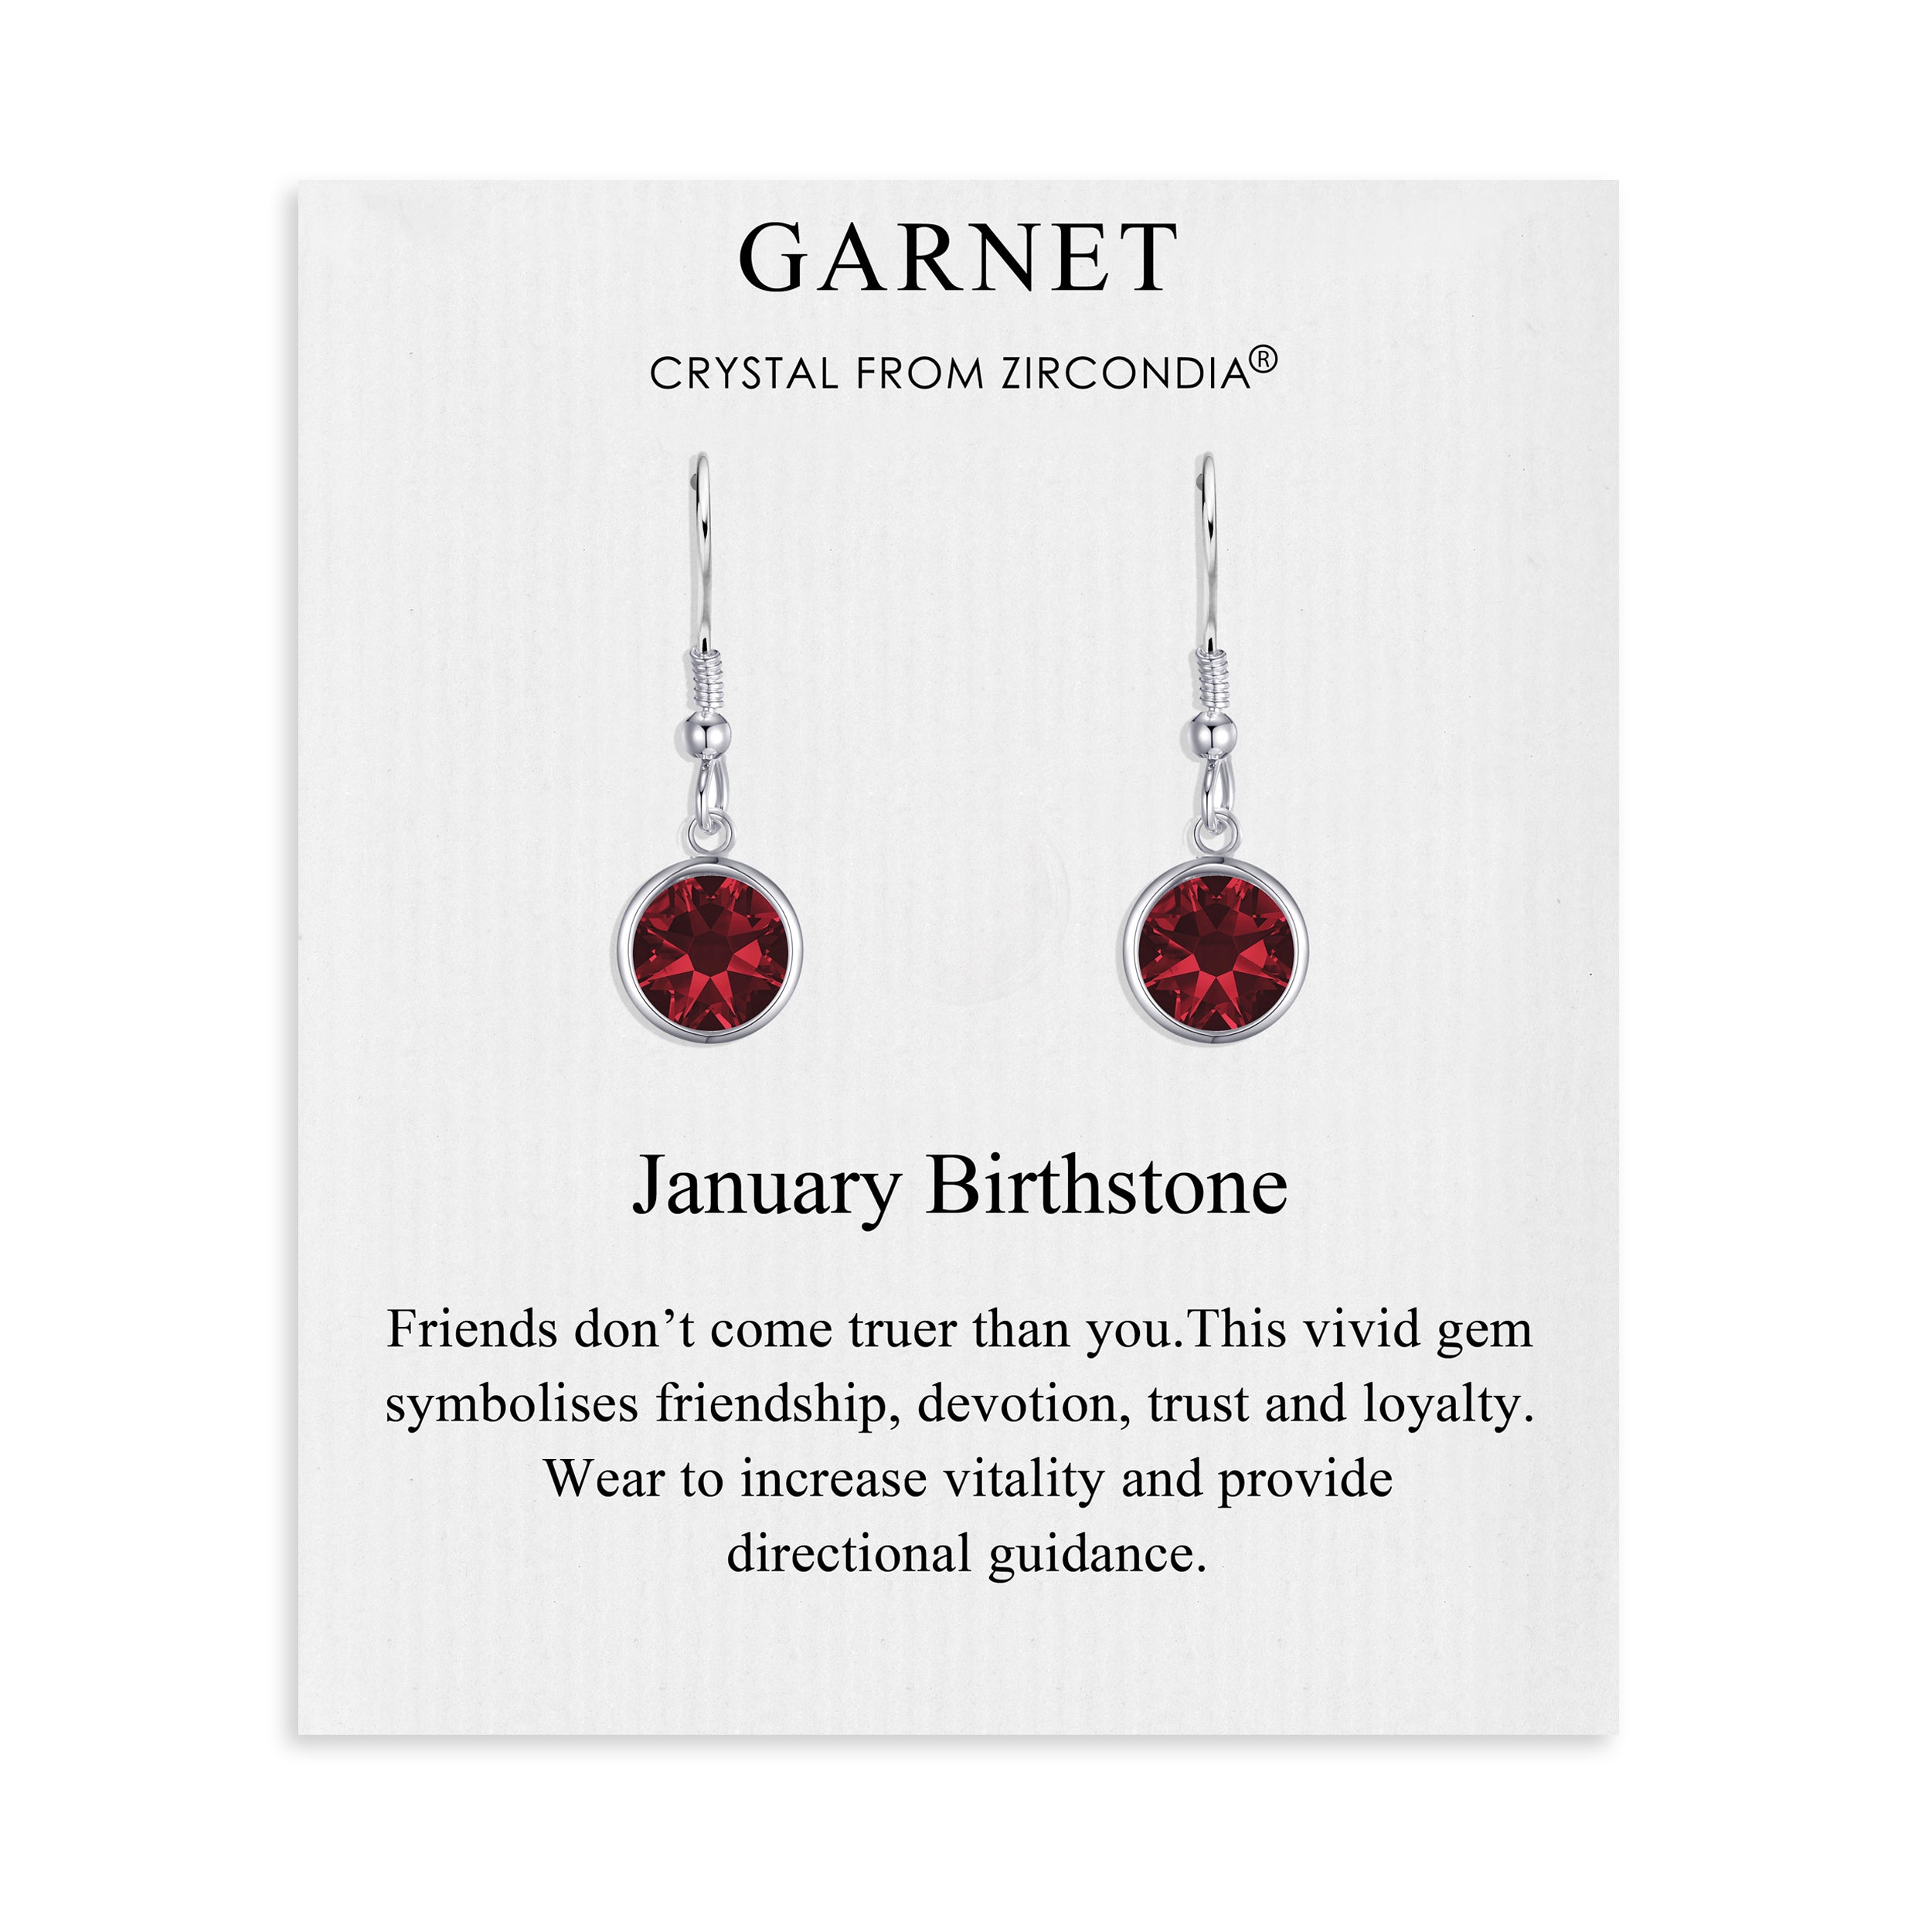 January Birthstone Drop Earrings Created with Garnet Zircondia® Crystals by Philip Jones Jewellery